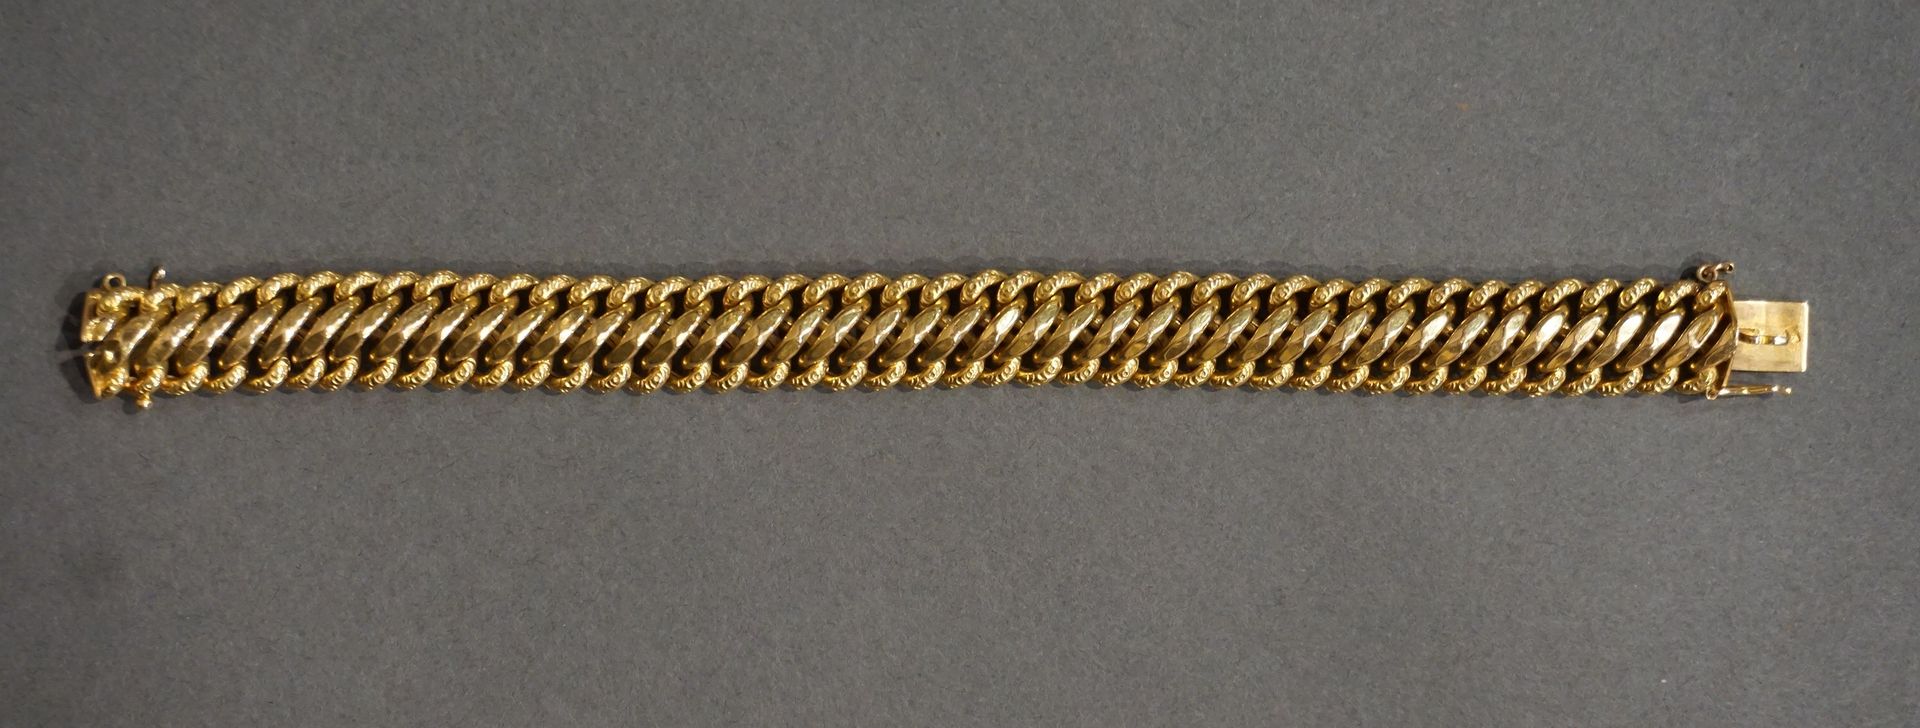 Bracelet Flaches, flexibles Armband aus Gold mit verschlungenen Maschen, 31grs